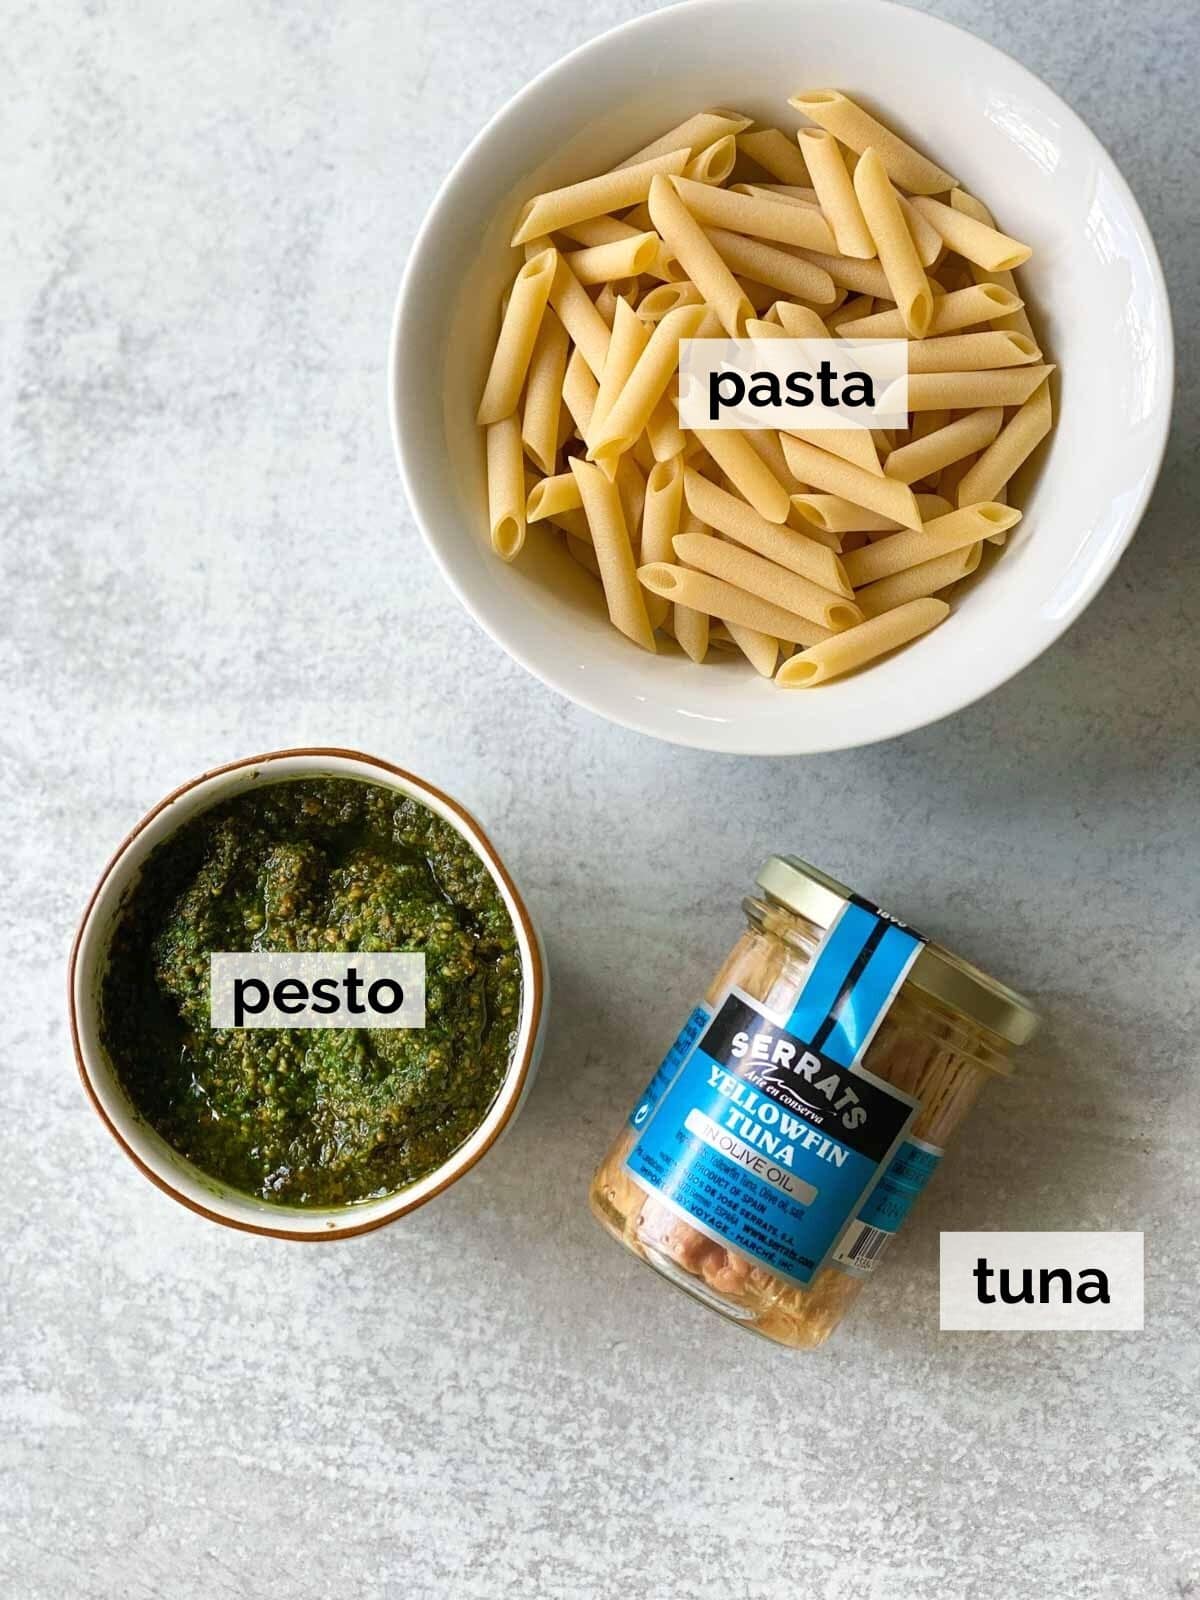 Pasta, pesto, and tuna on a table.